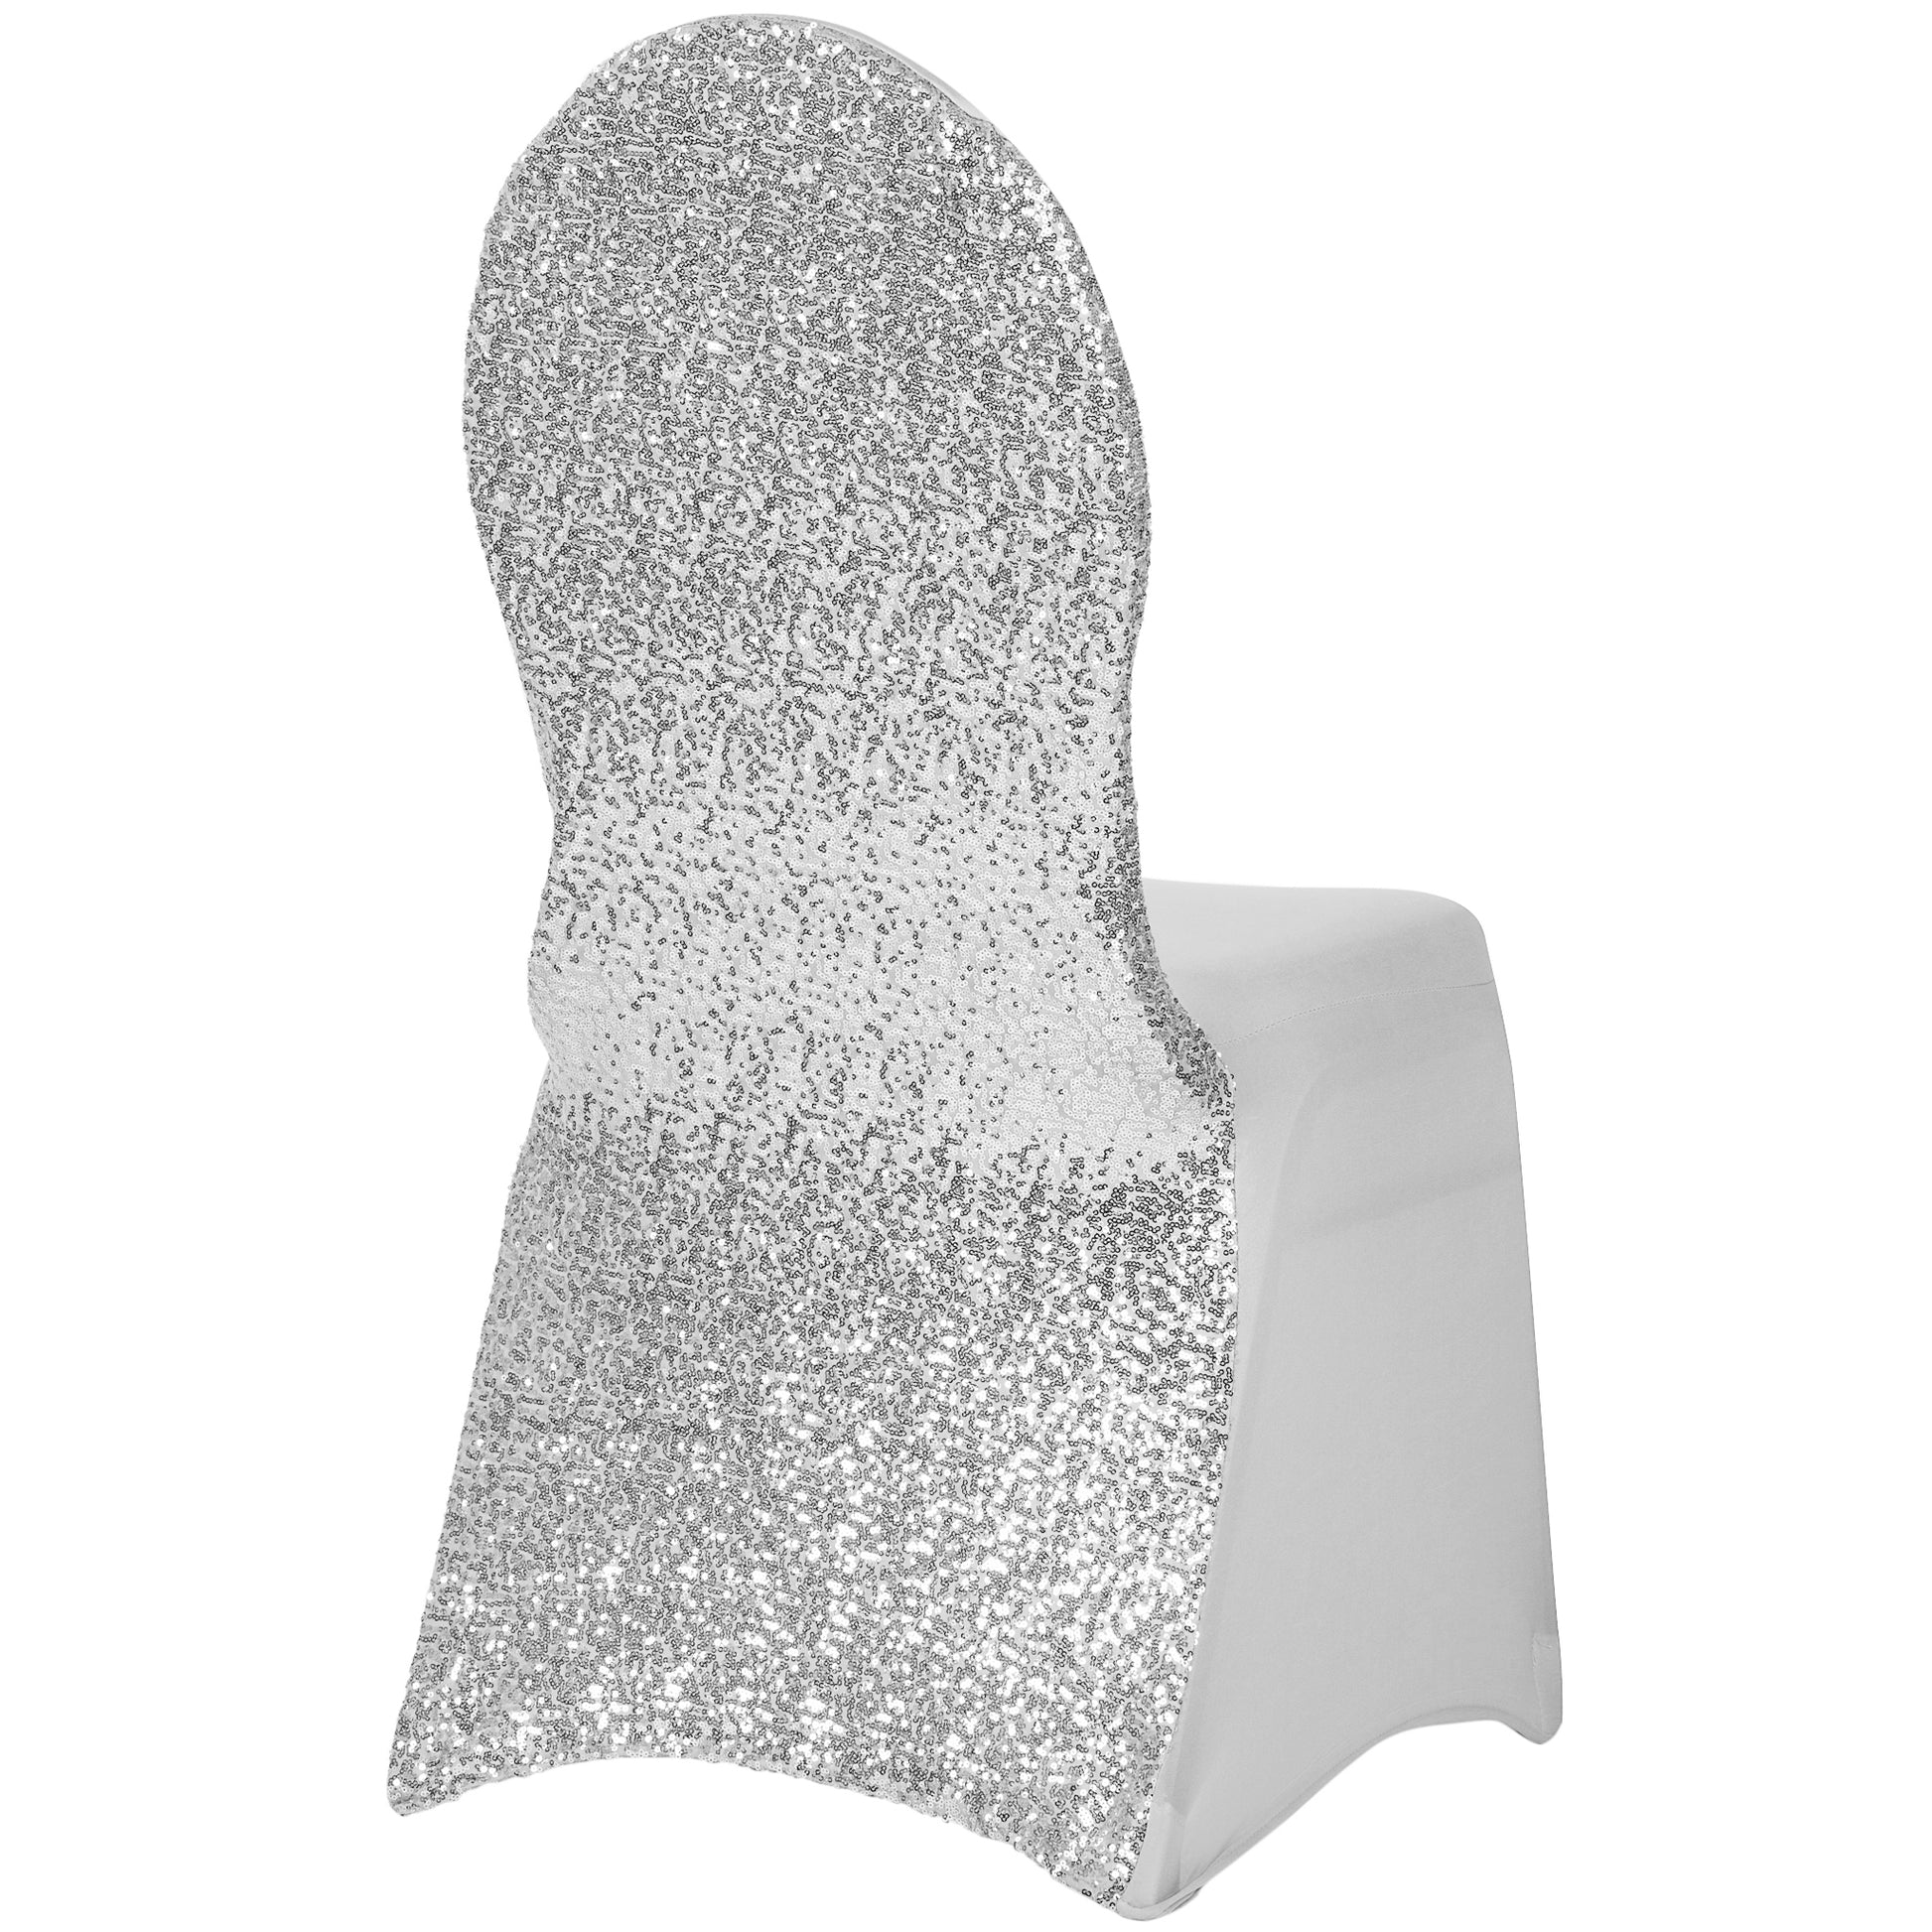 Stretch Spandex Banquet Chair Cover White